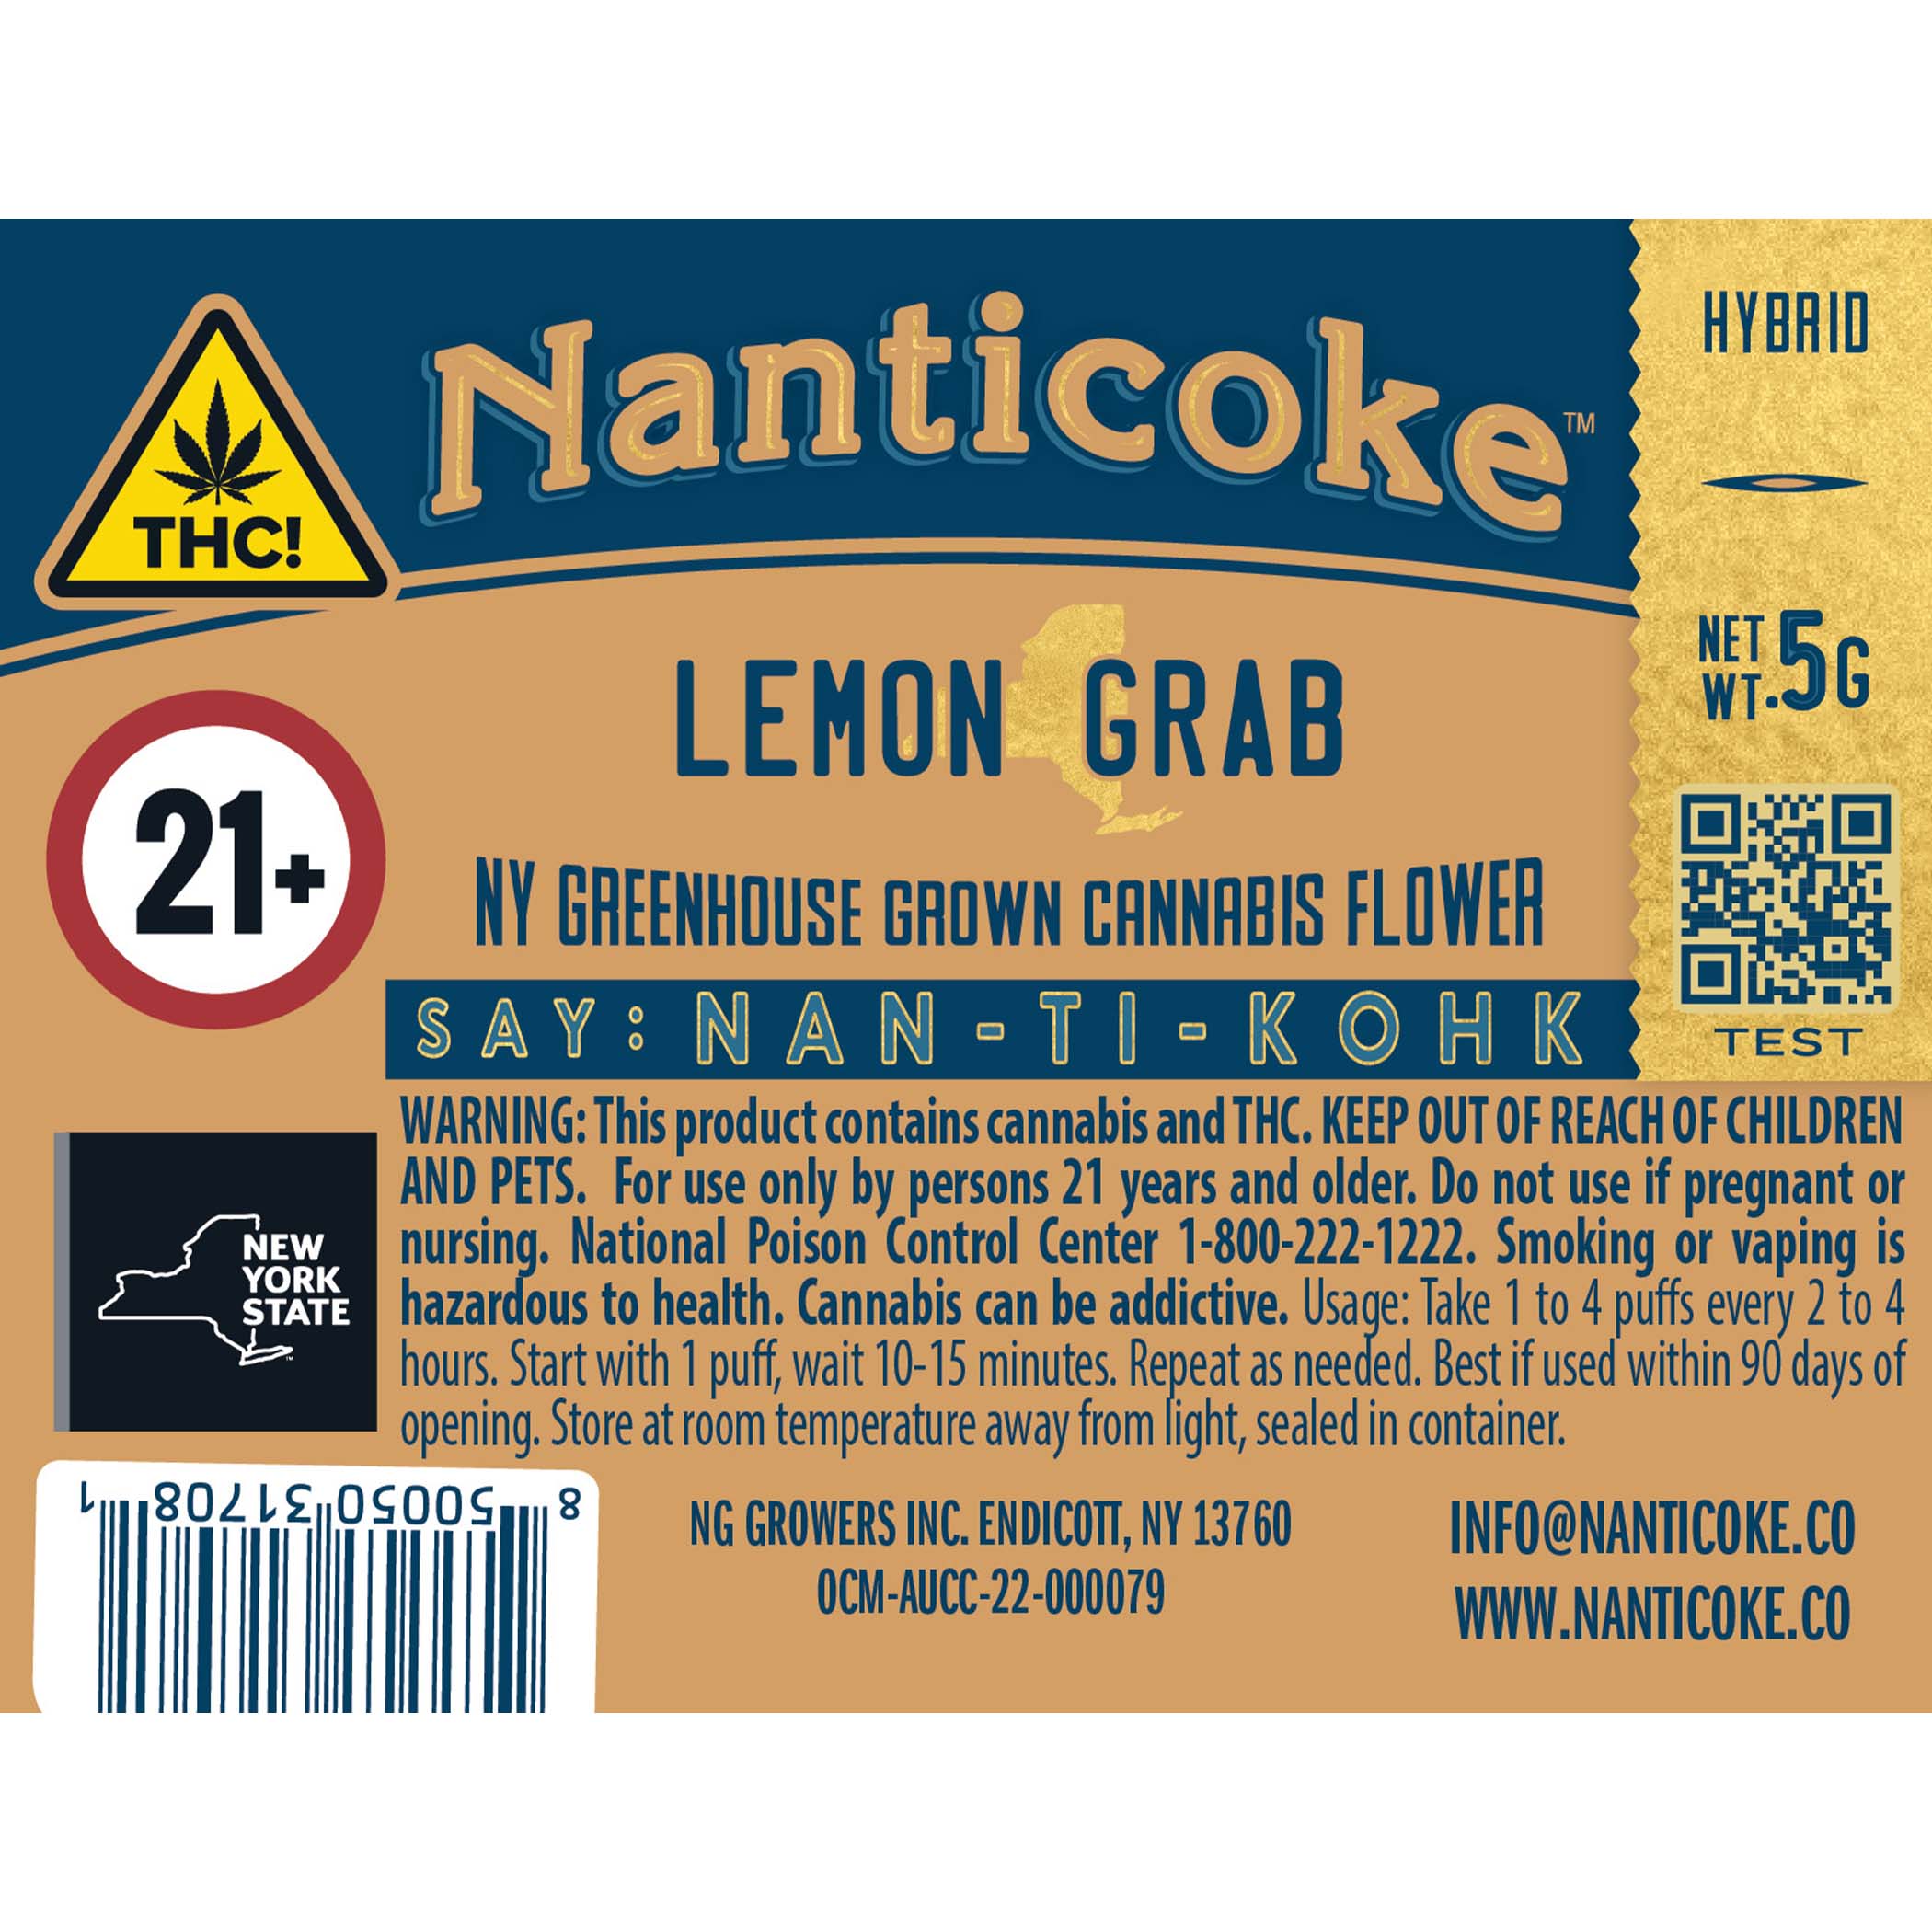 Lemon Grab Pre-Roll Joints label